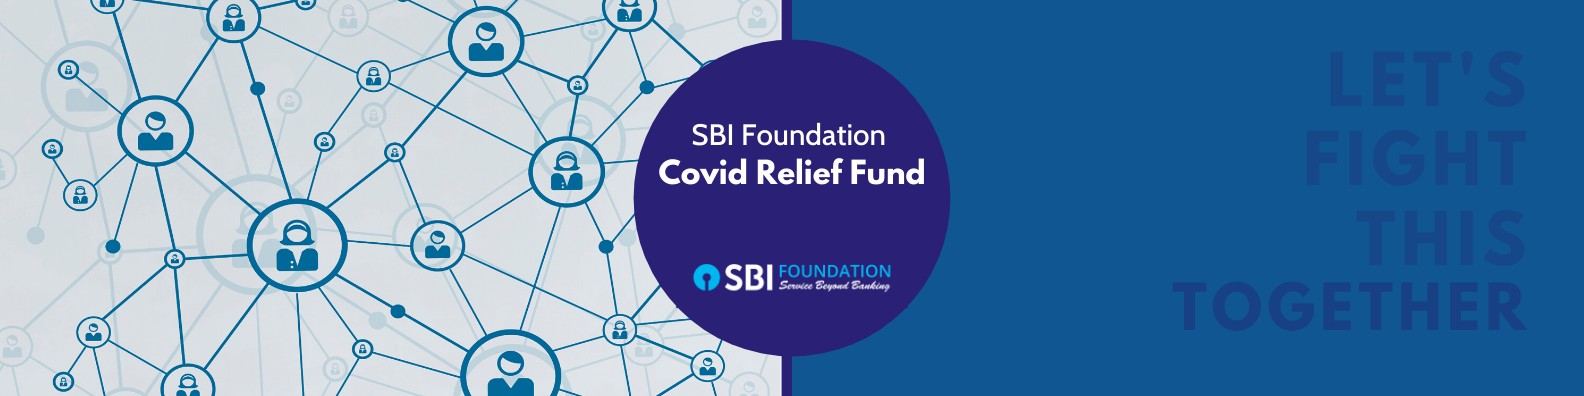 Sbi Foundation Linkedin